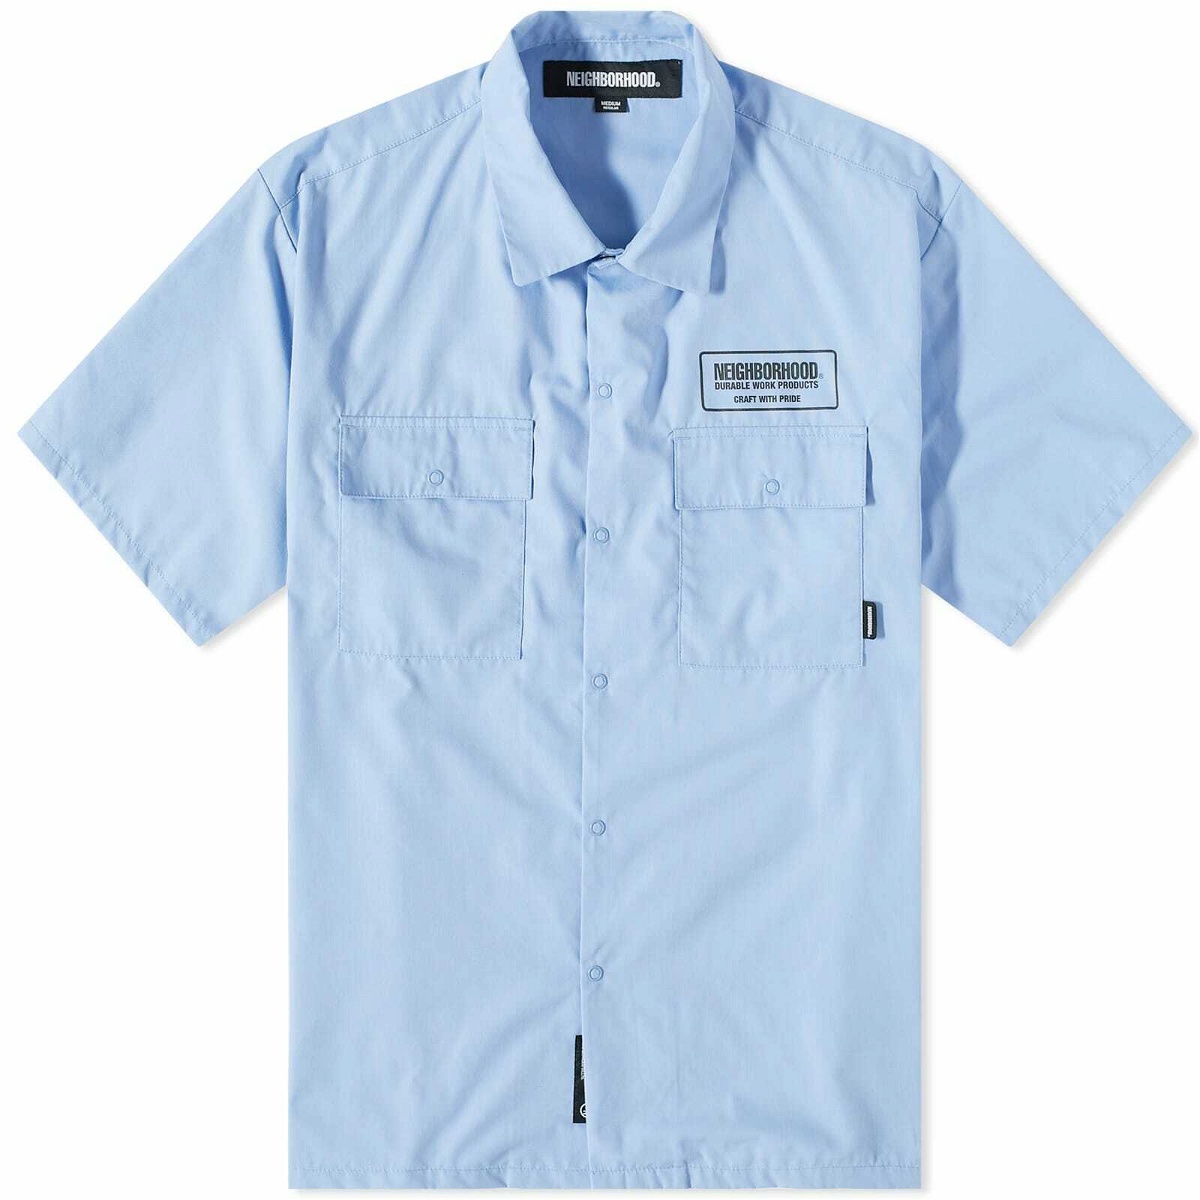 Neighborhood Men's Classic Short Sleeve Work Shirt in Blue Neighborhood